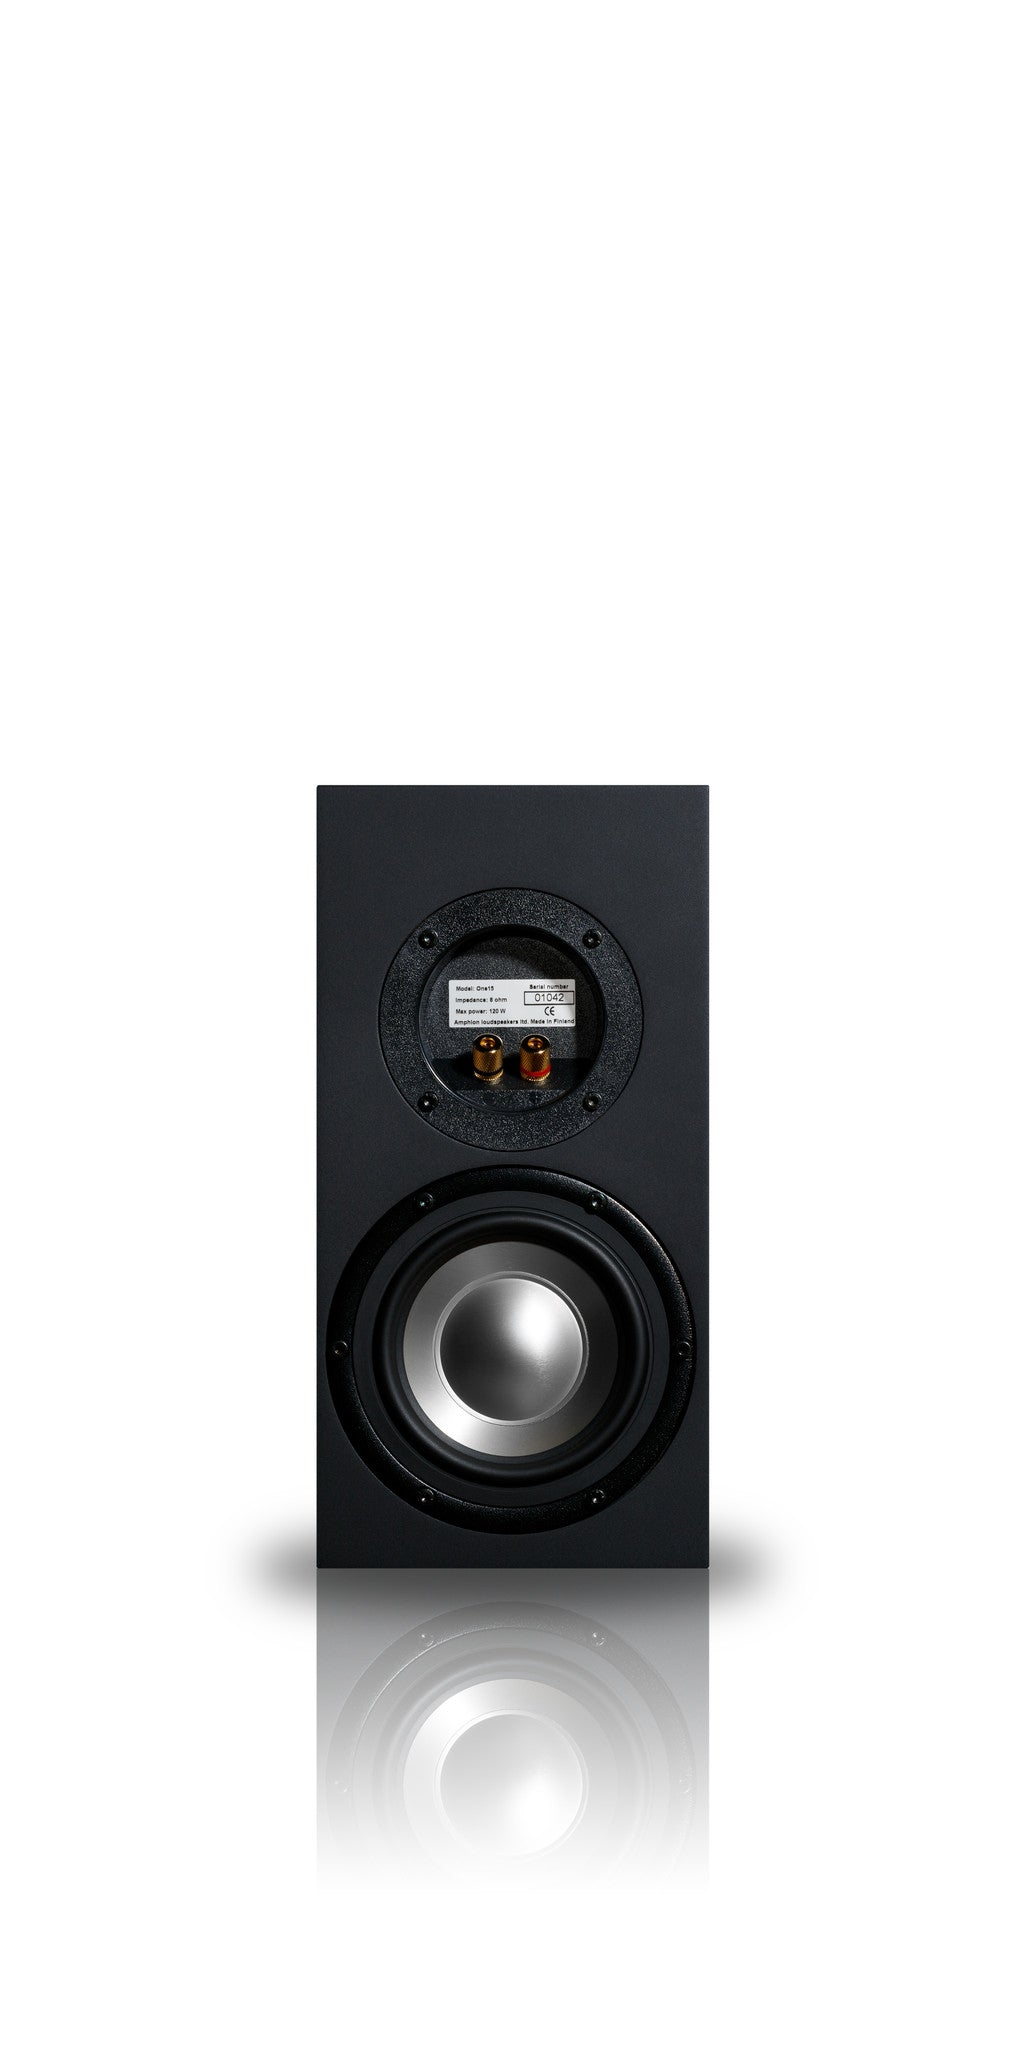 Monitor Systems - Amphion - Amphion One15 - Professional Audio Design, Inc